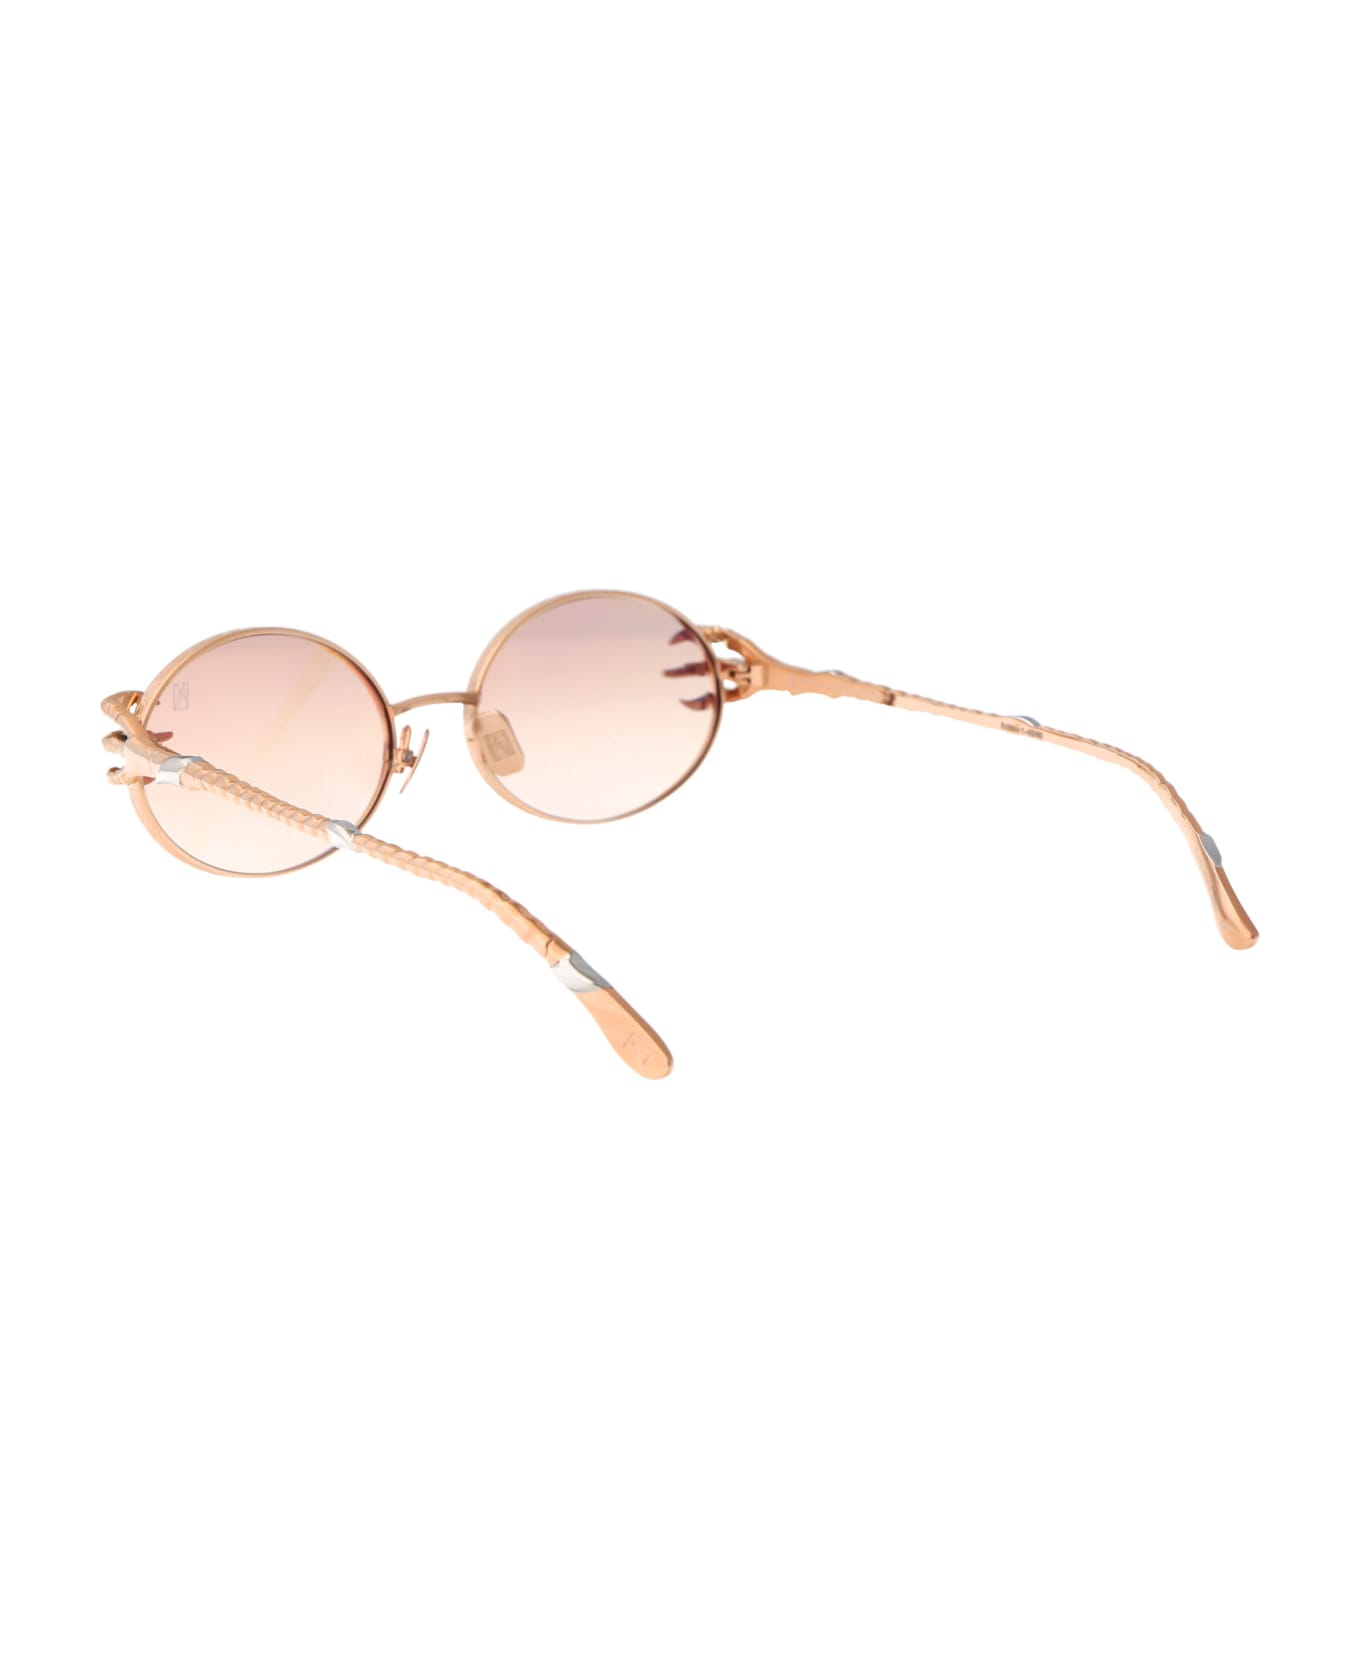 Anna-Karin Karlsson Claw Aventure Sunglasses Versace - ROSE GOLD